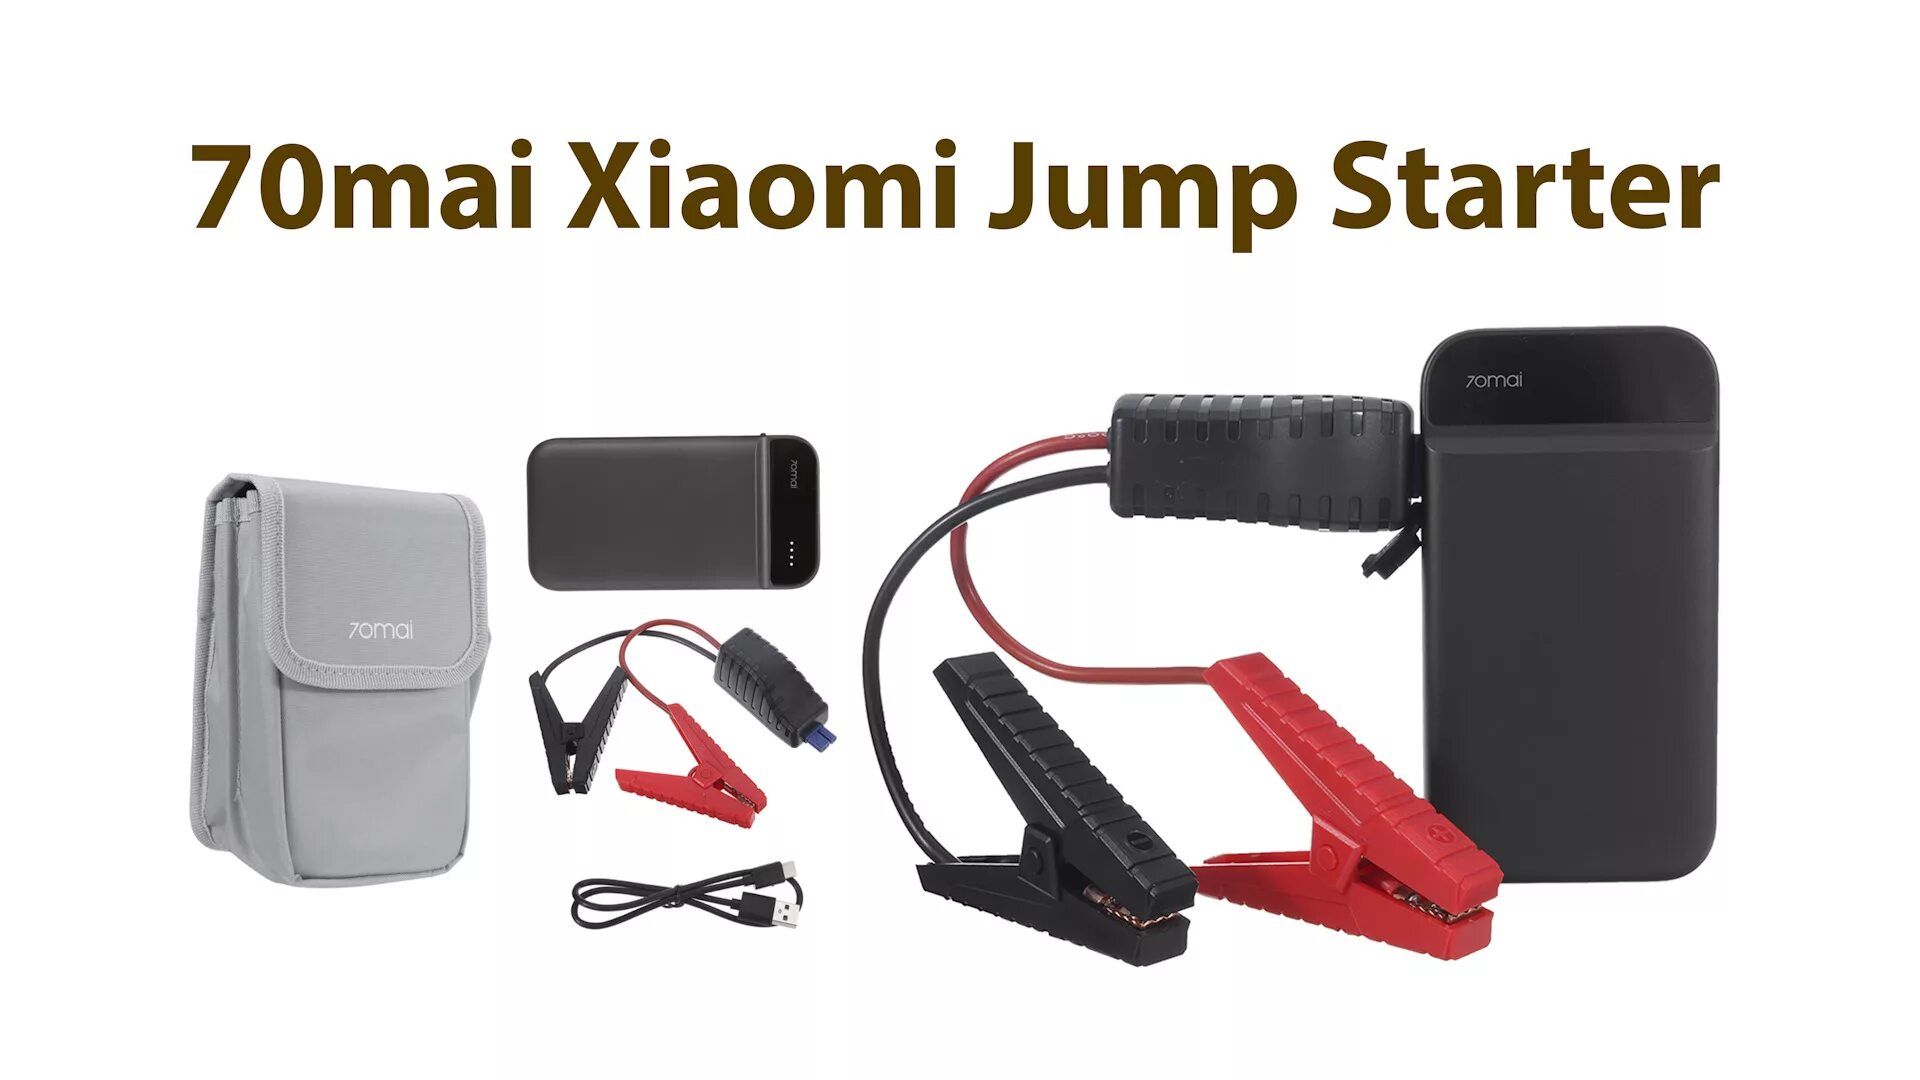 Xiaomi 70mai starter. Пусковое зарядное устройство Xiaomi 70mai Jump Starter. Xiaomi 70mai Jump Starter Max. Пуско-зарядное устройство Xiaomi 70mai Jump Starter Max. 70 Mai Jump Starter 11000mah.